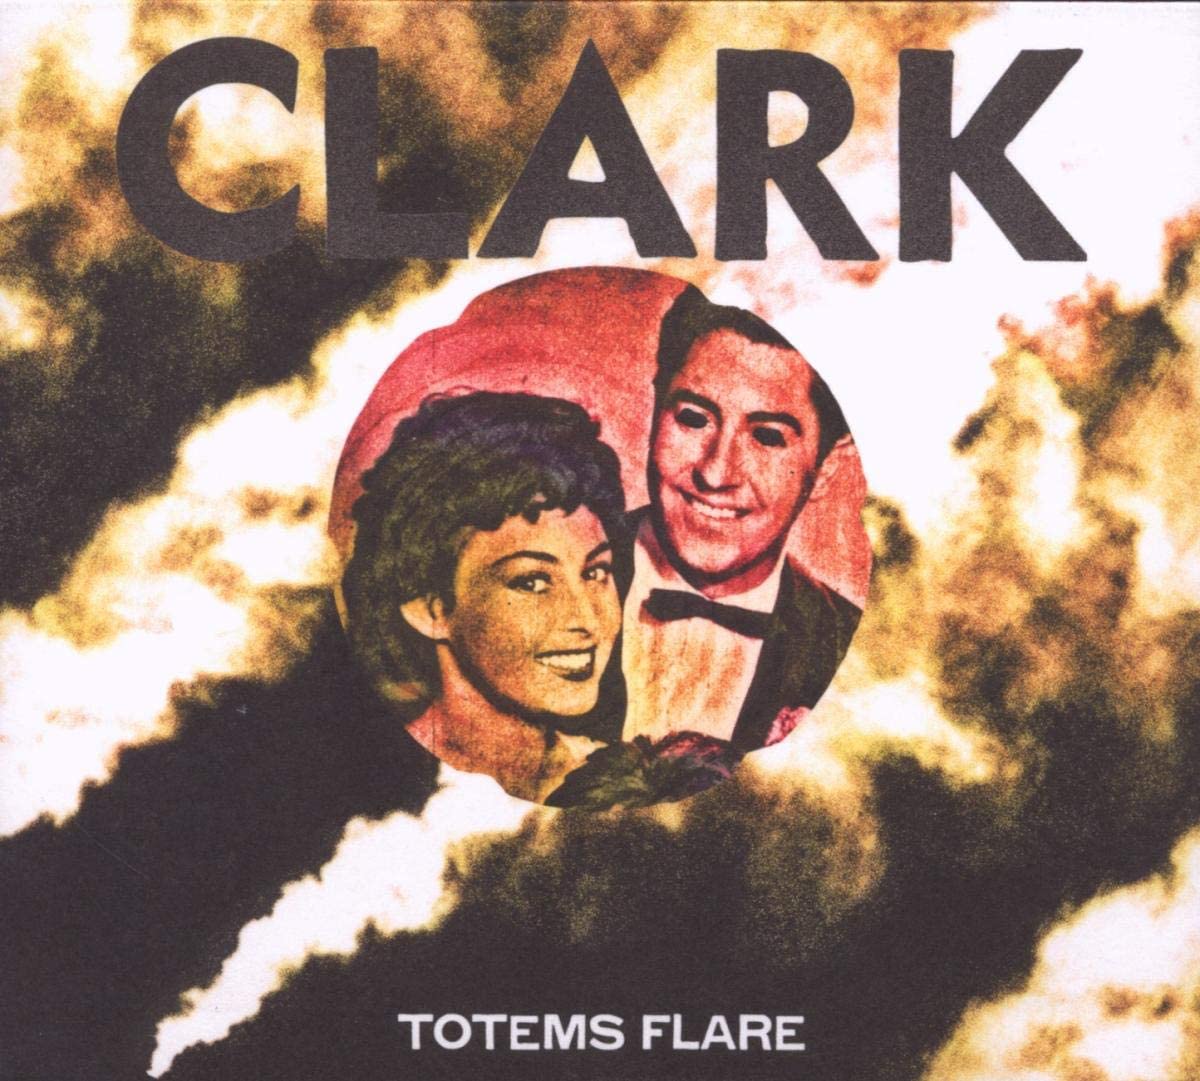 TOTEMS FLARE / CLARK